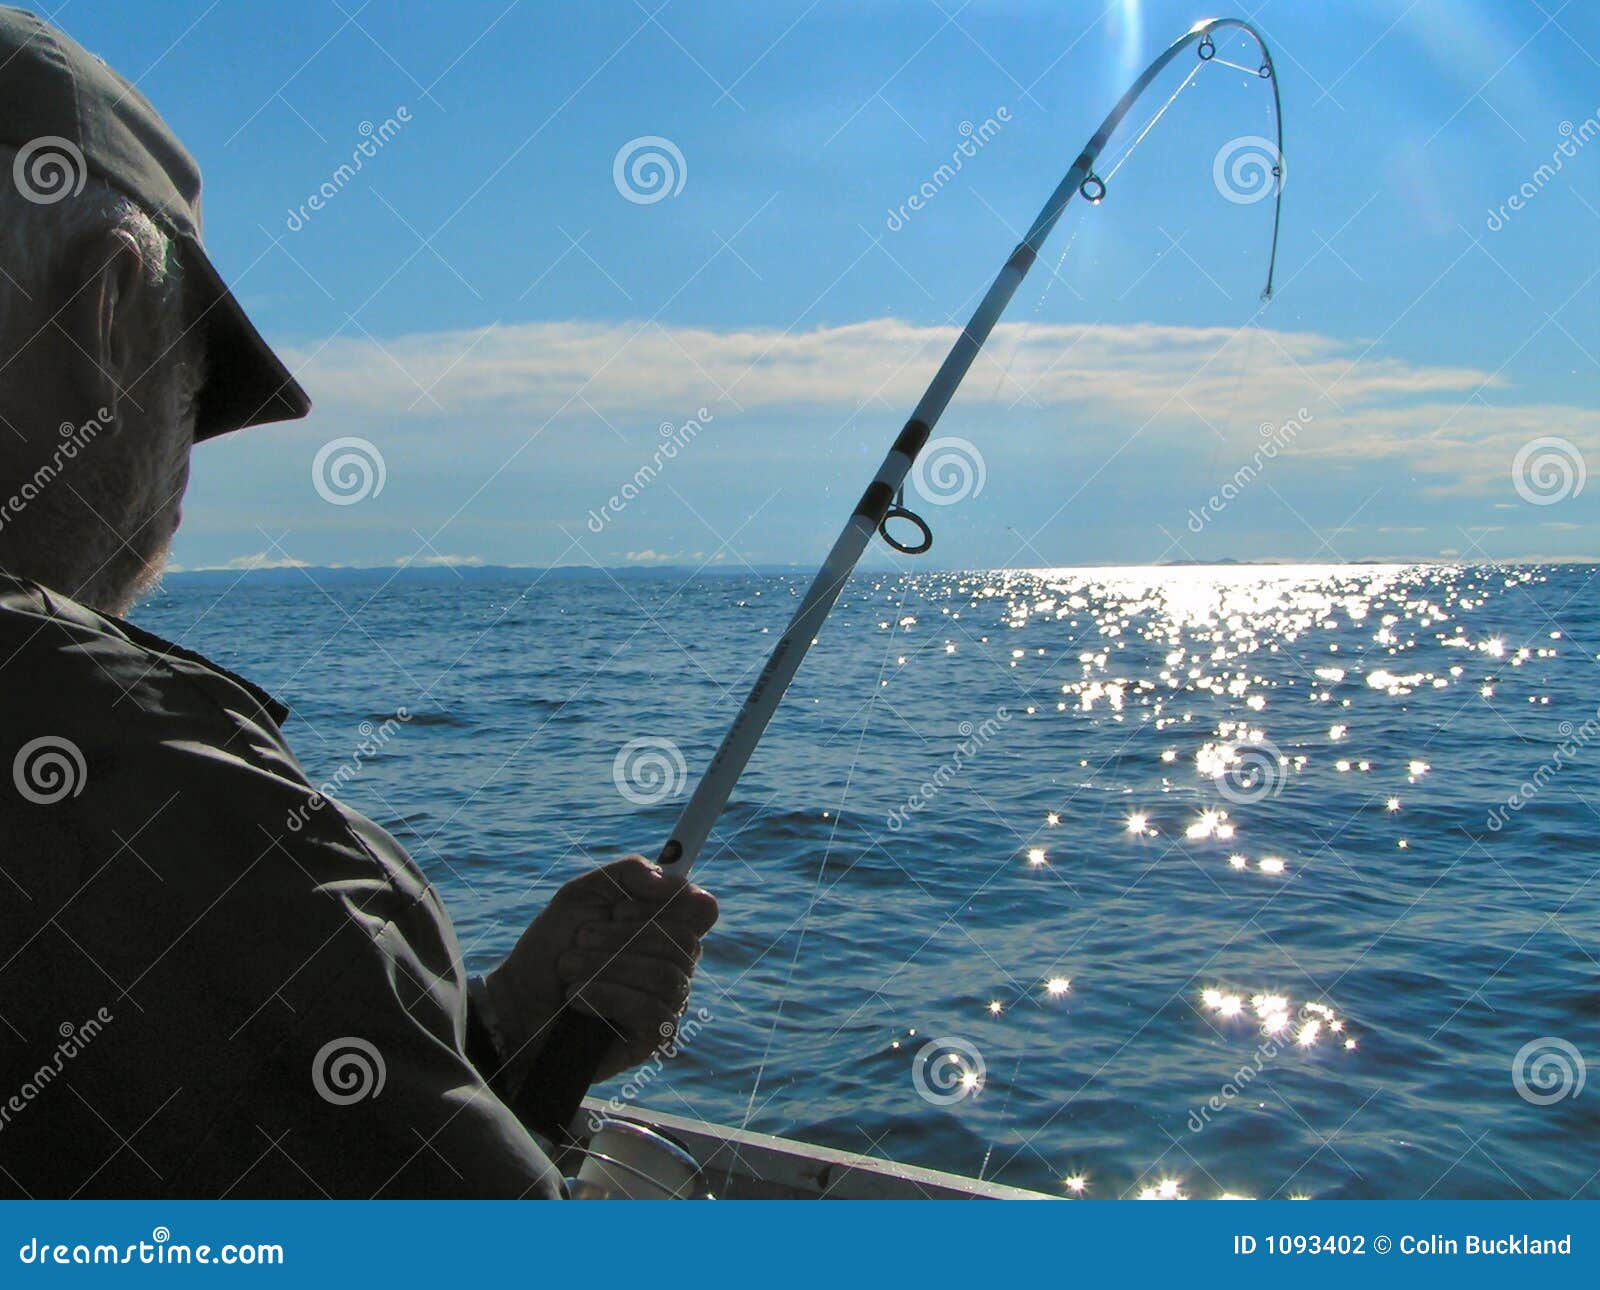 13,724 Deep Sea Fishing Stock Photos - Free & Royalty-Free Stock